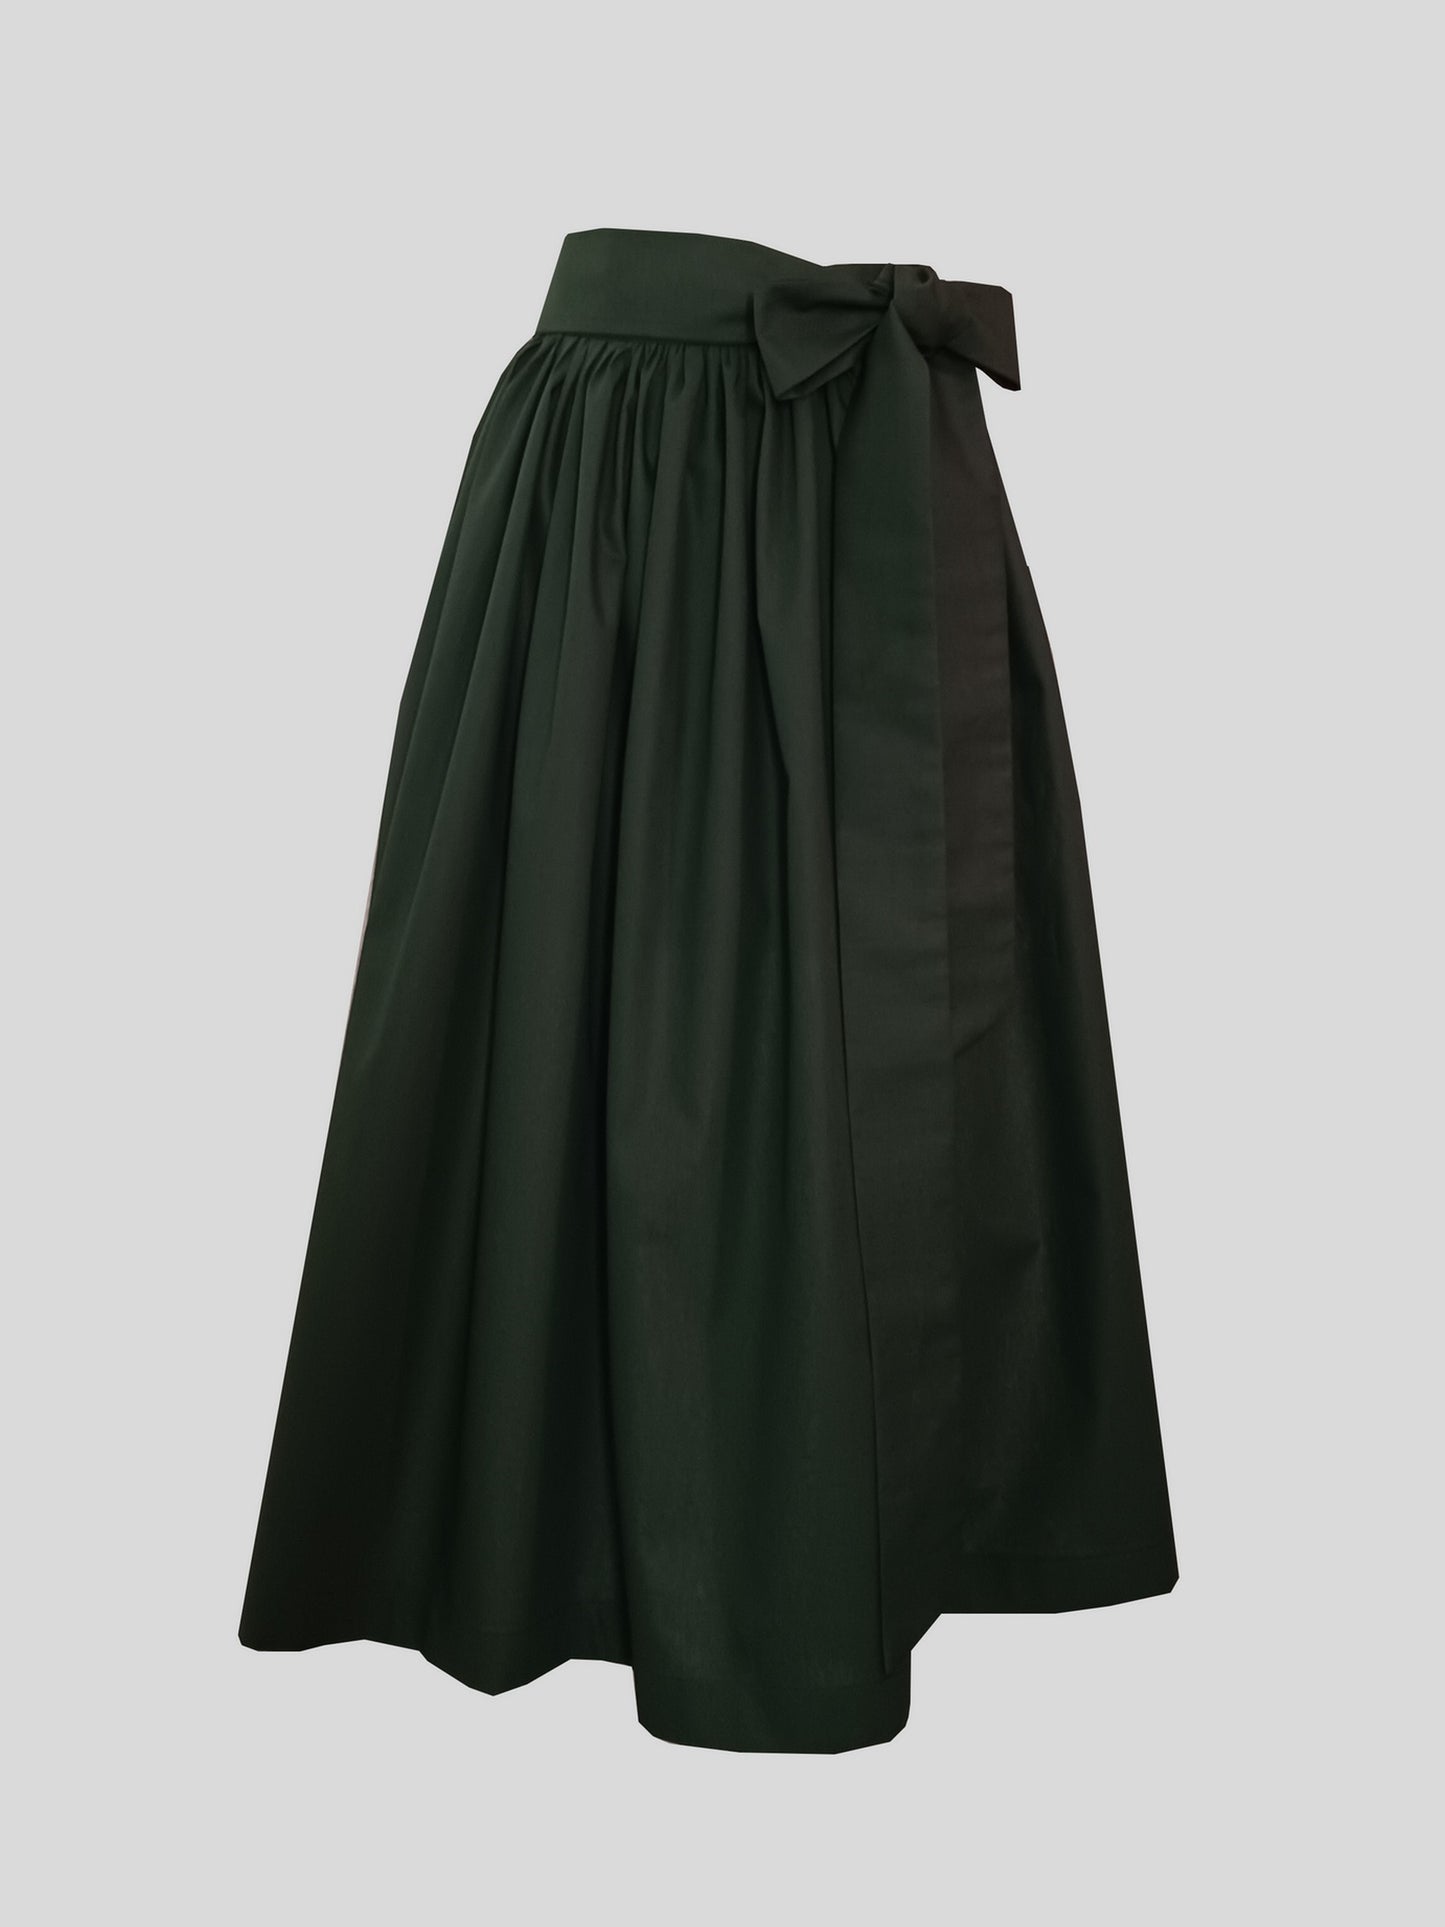 Ladies dirndl apron BW army green S/50cm &gt; Buy it now